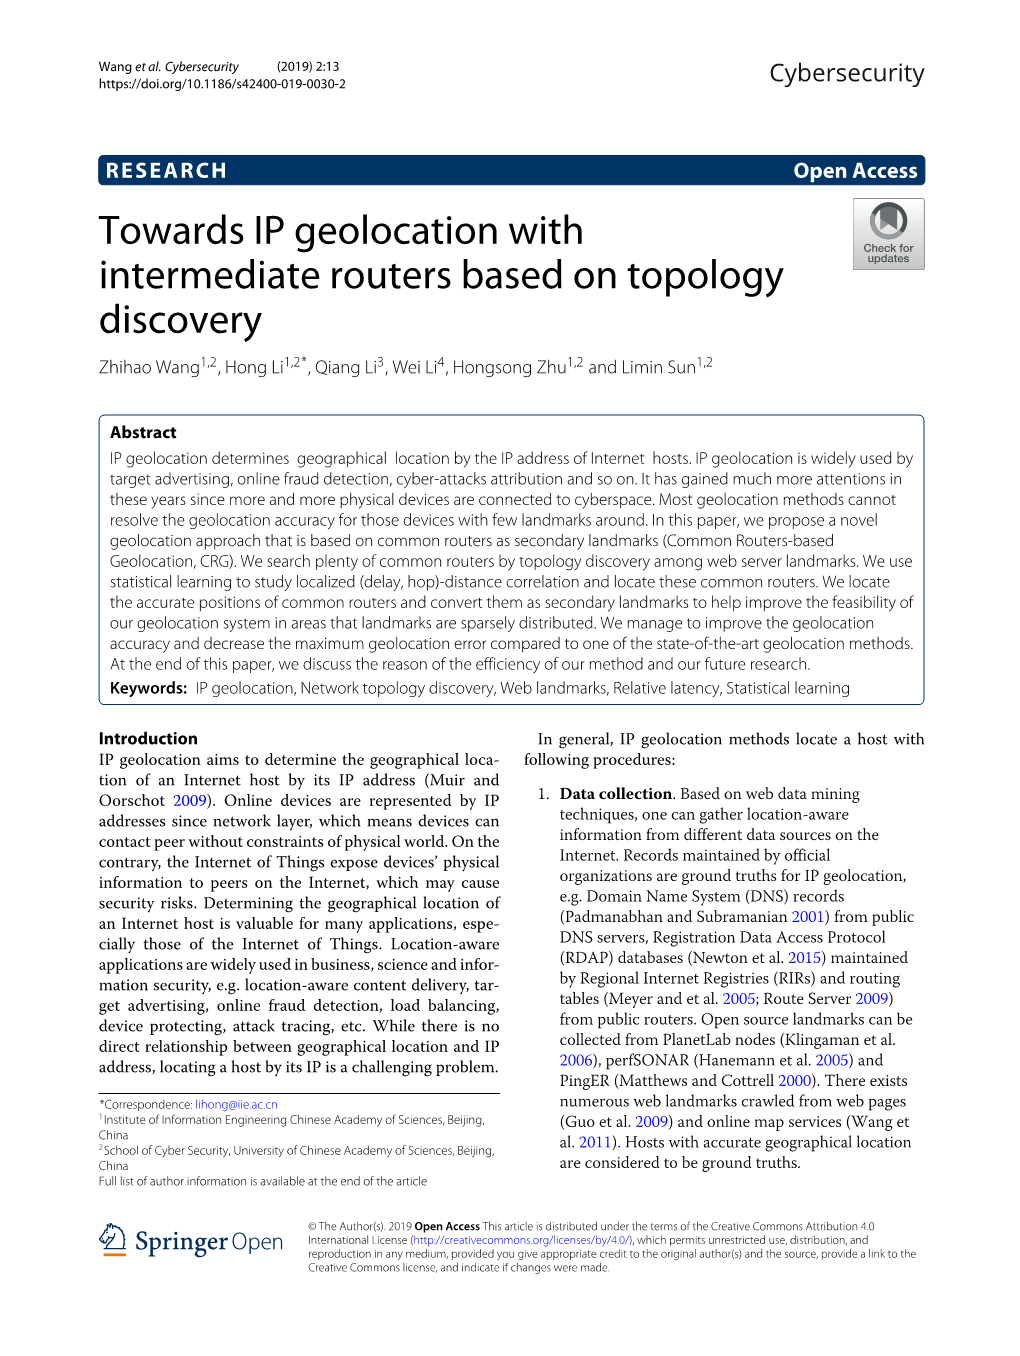 Towards IP Geolocation with Intermediate Routers Based on Topology Discovery Zhihao Wang1,2,Hongli1,2*,Qiangli3,Weili4, Hongsong Zhu1,2 and Limin Sun1,2